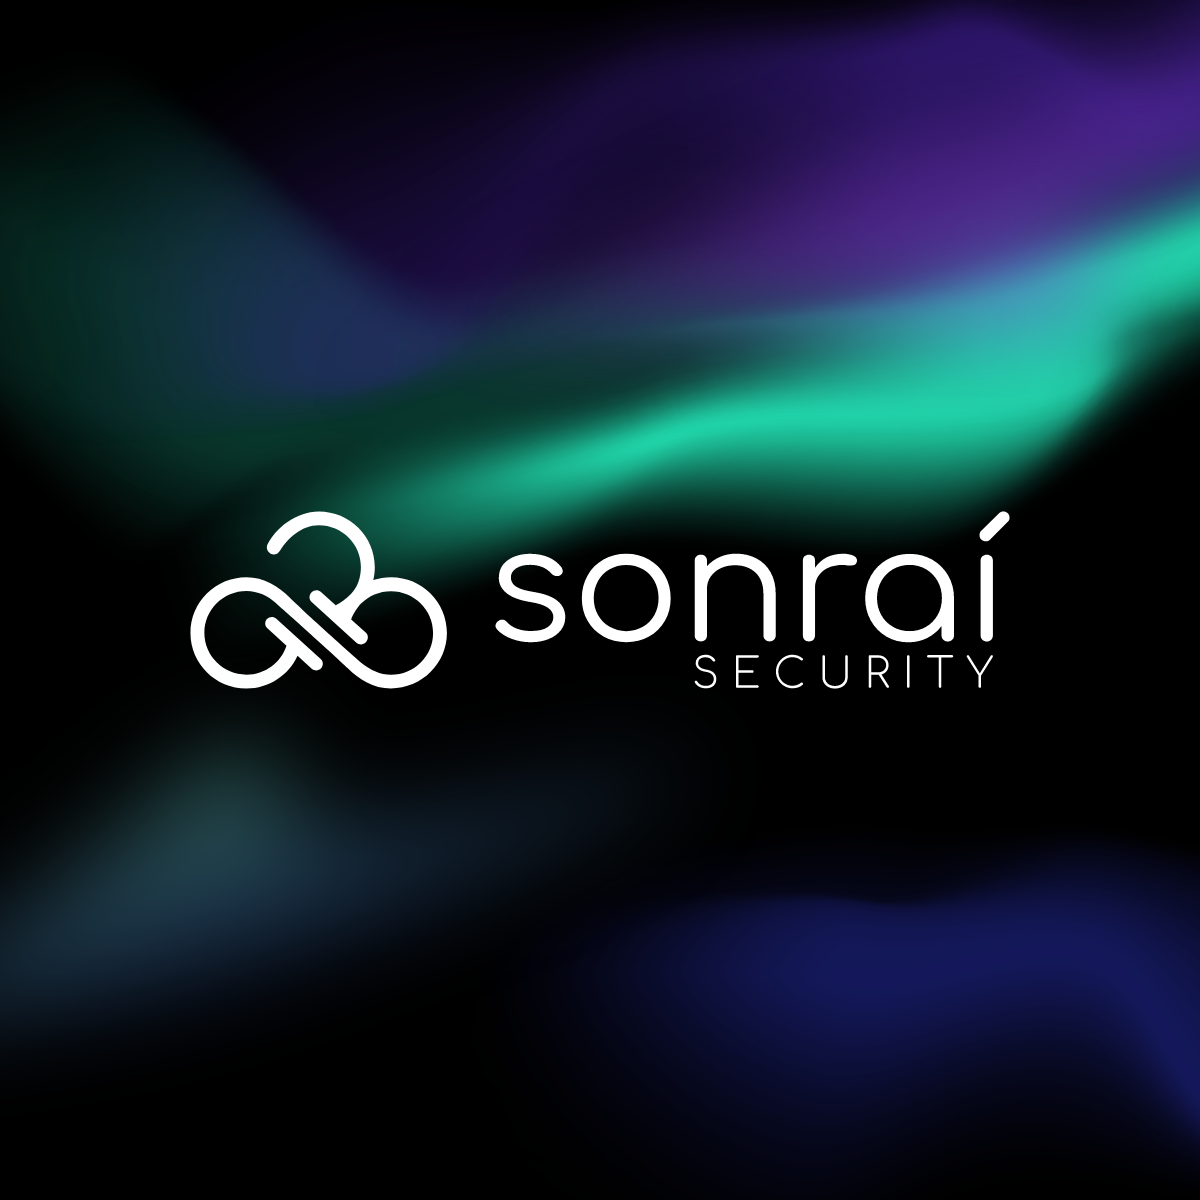 Sonrai security featured imaged icon